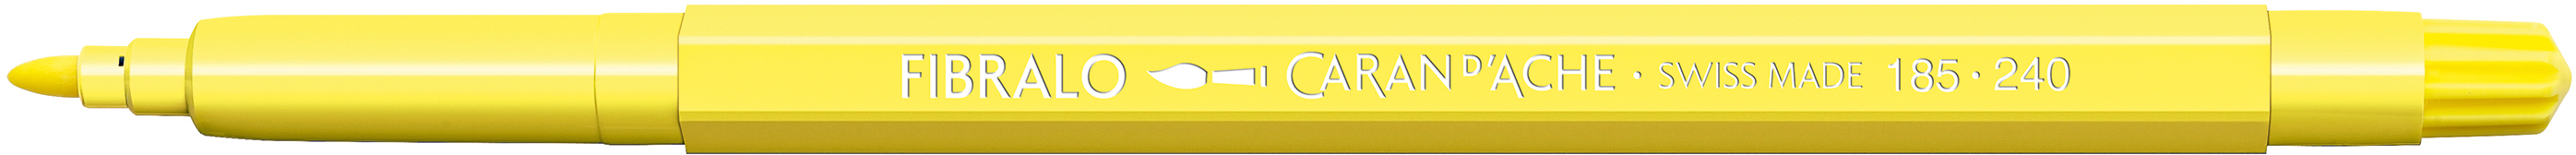 CARAN D'ACHE Stylo fibre Fibralo 185.240 jaune jaune